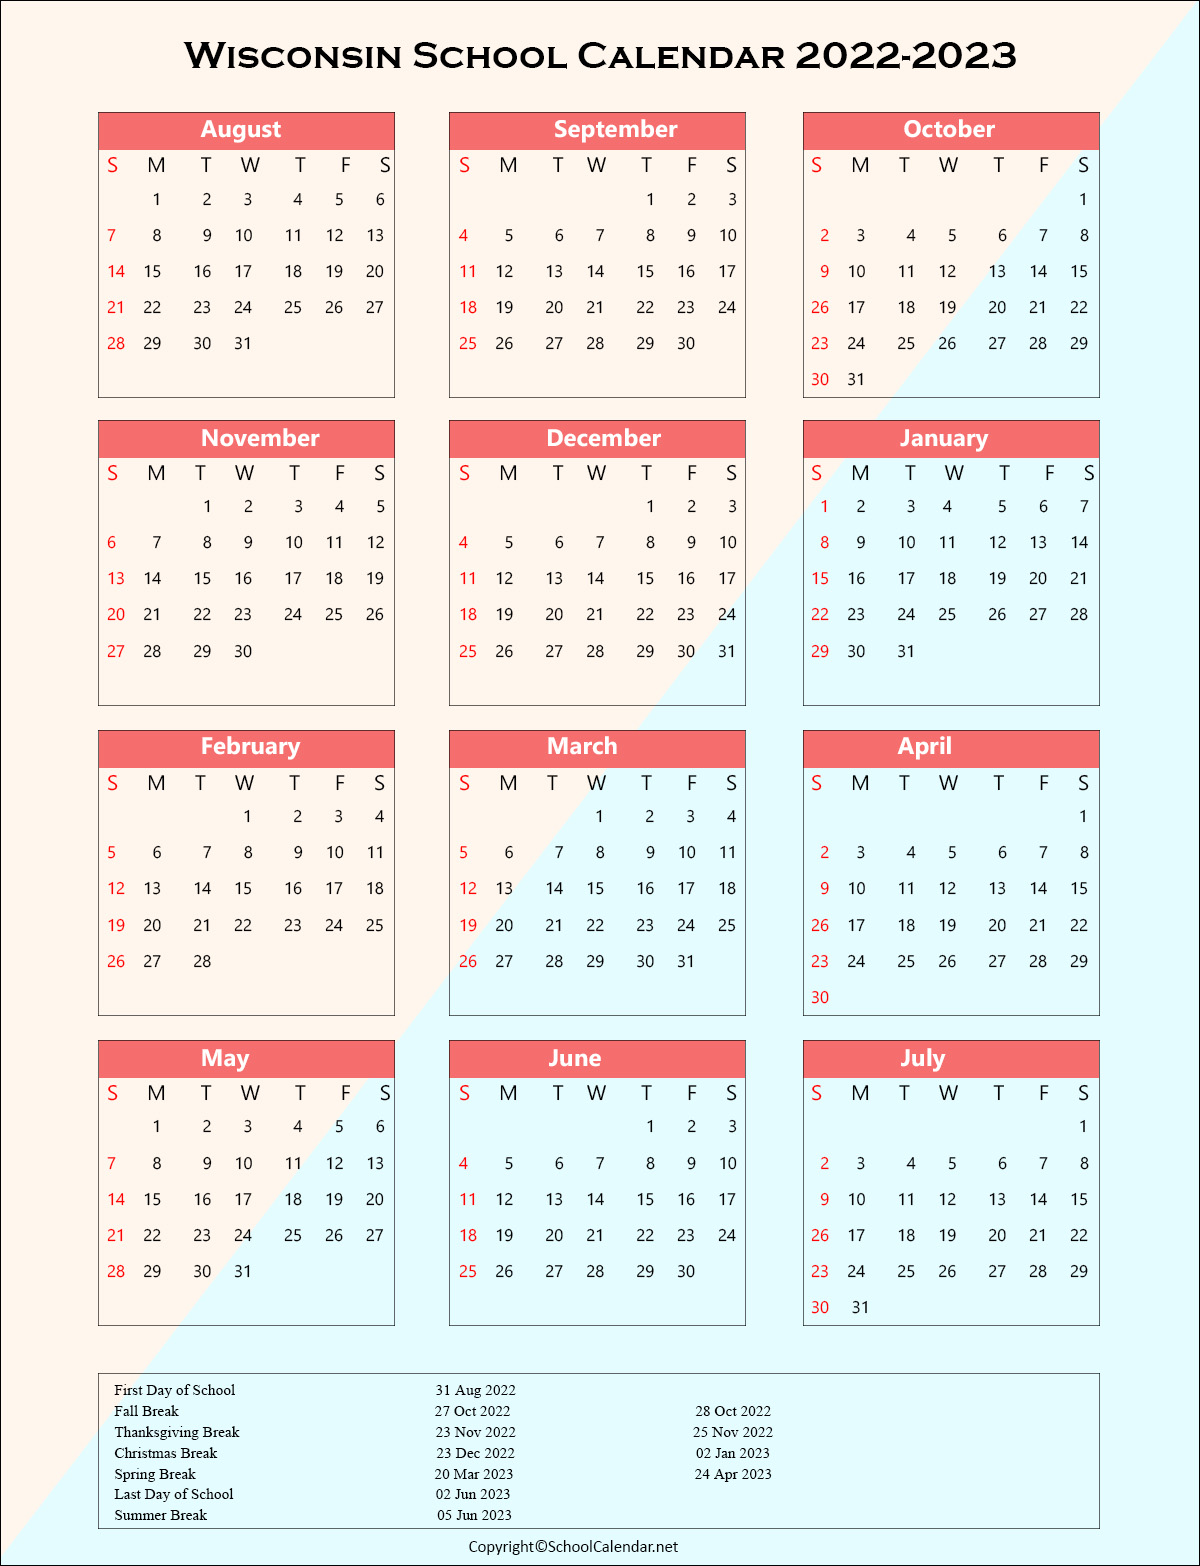 Wisconsin School Holiday Calendar 2022